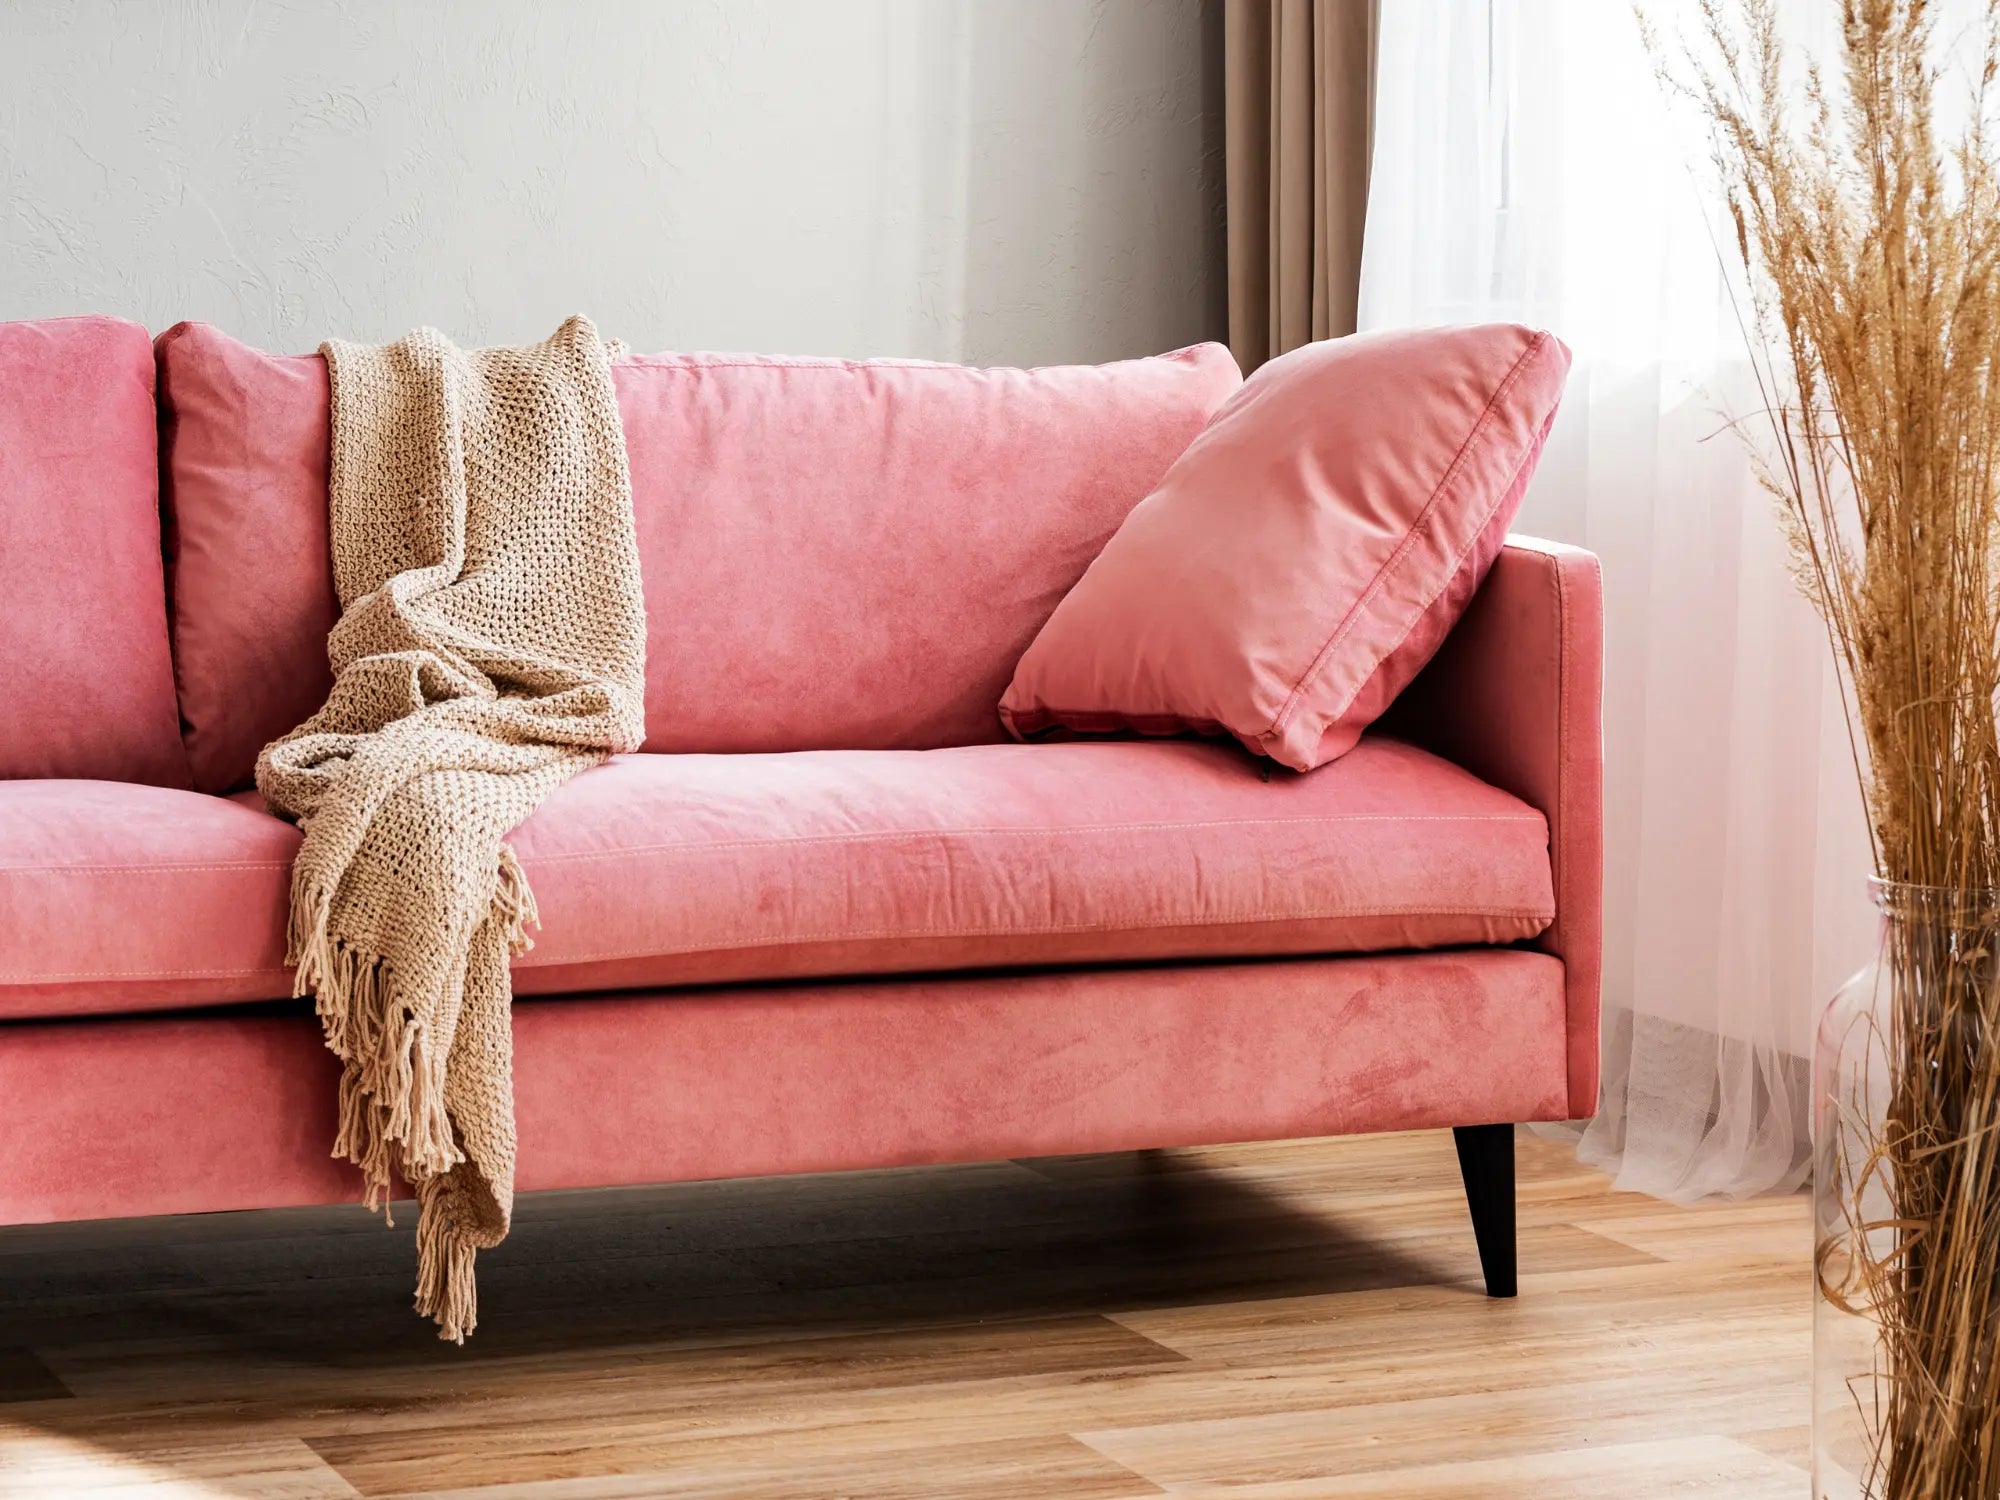 Pink living room furniture ideas